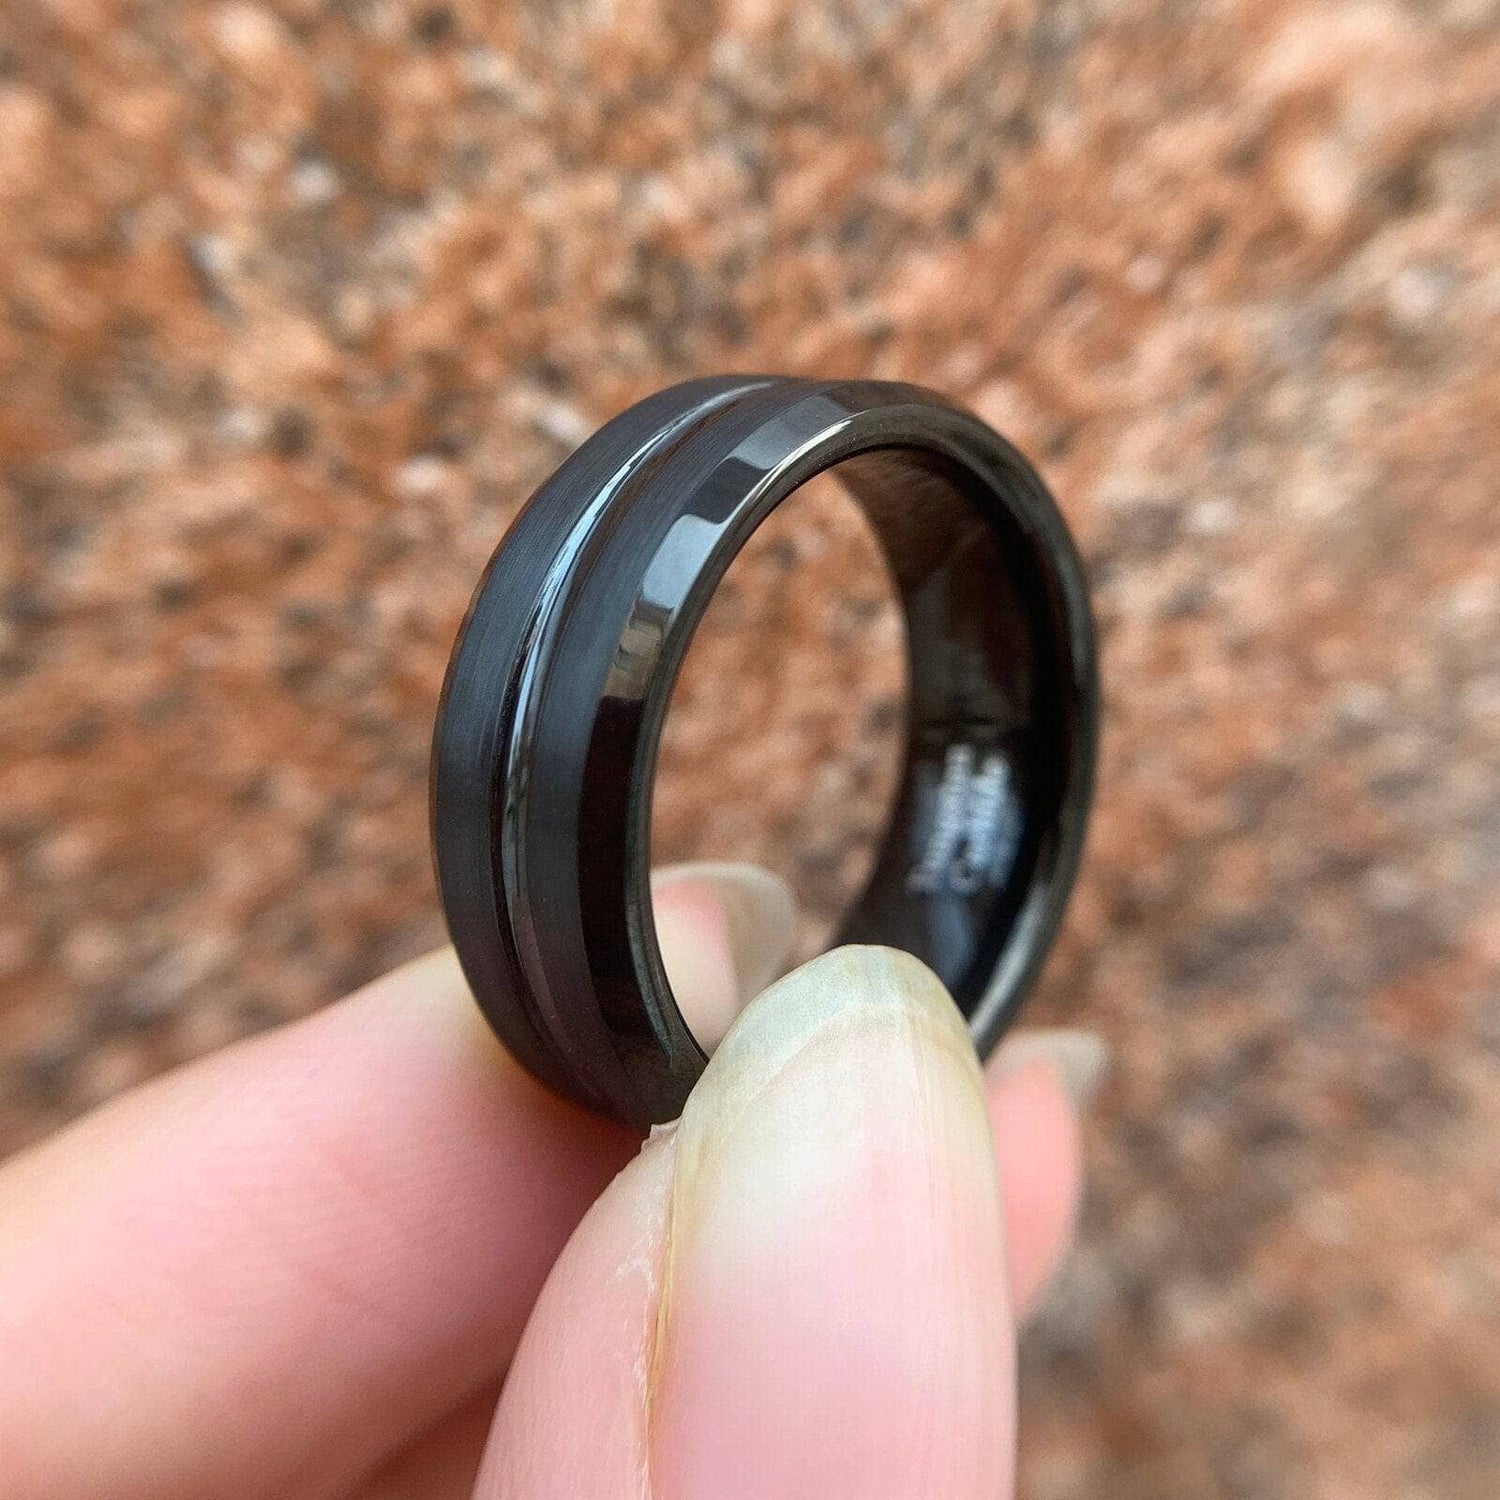 Men's Black Tungsten Carbide 8mm Wedding Band-Black Diamonds New York